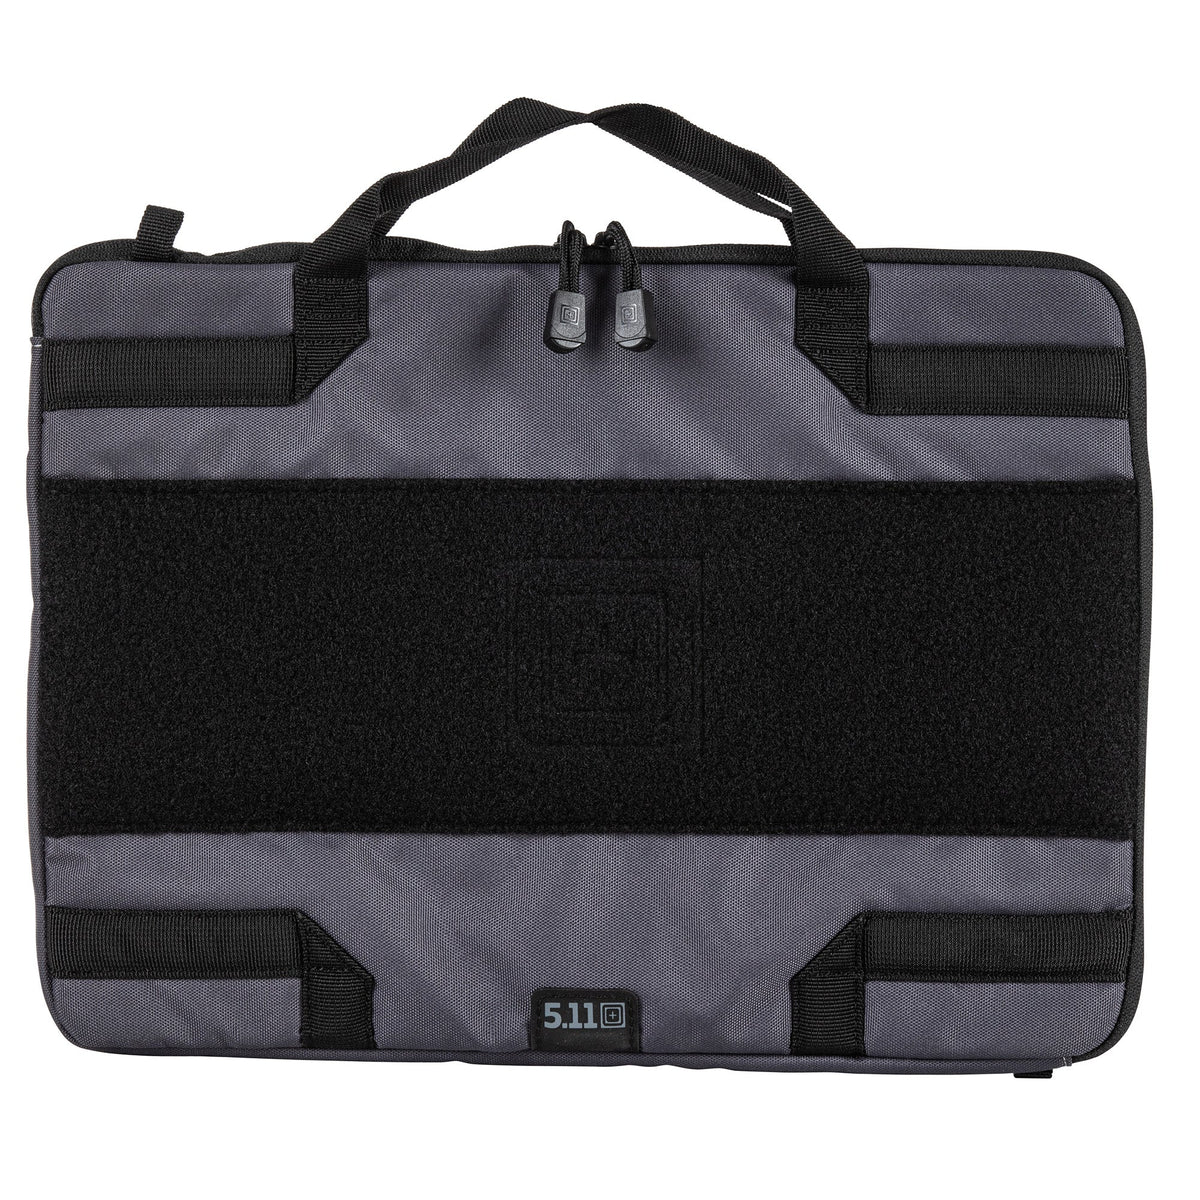 5.11 Tactical Rapid Laptop Case - Coal Bags, Packs and Cases Tactical Gear Tactical Gear Supplier Tactical Distributors Australia